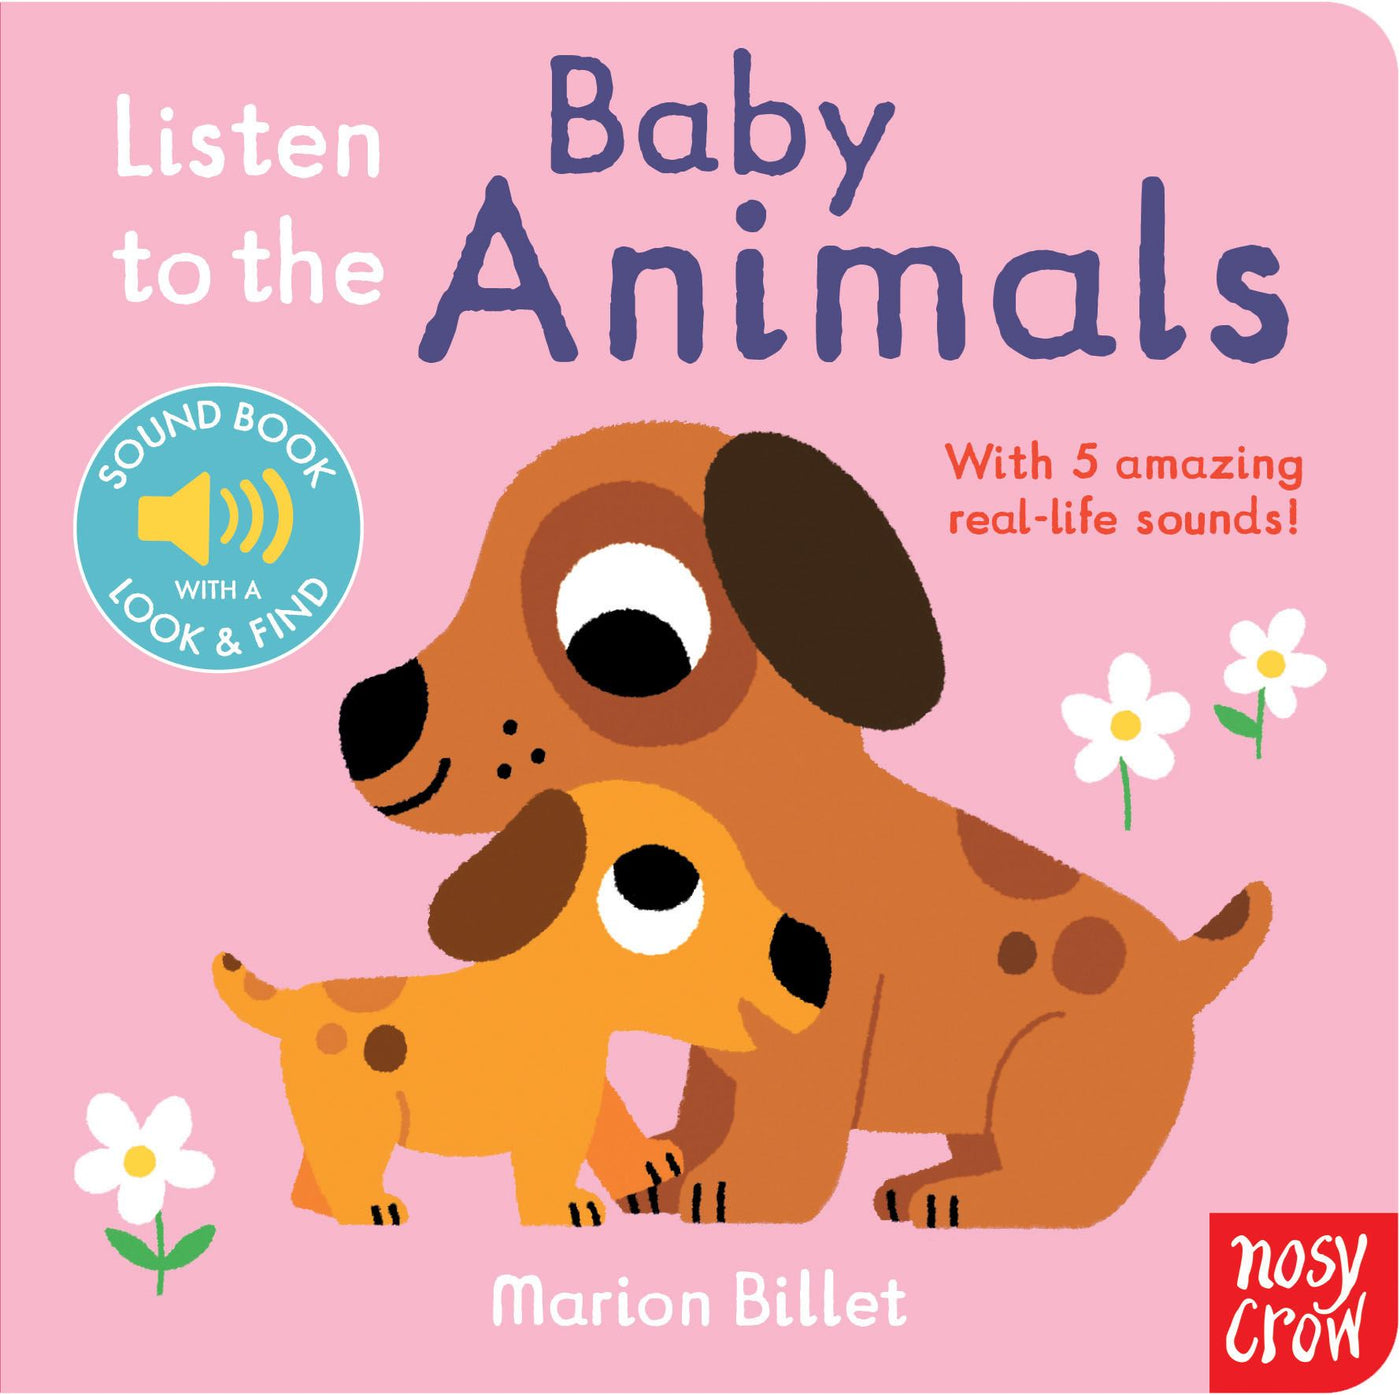 Listen To The Baby Animals - Sound Book - Books - Edie & Eve